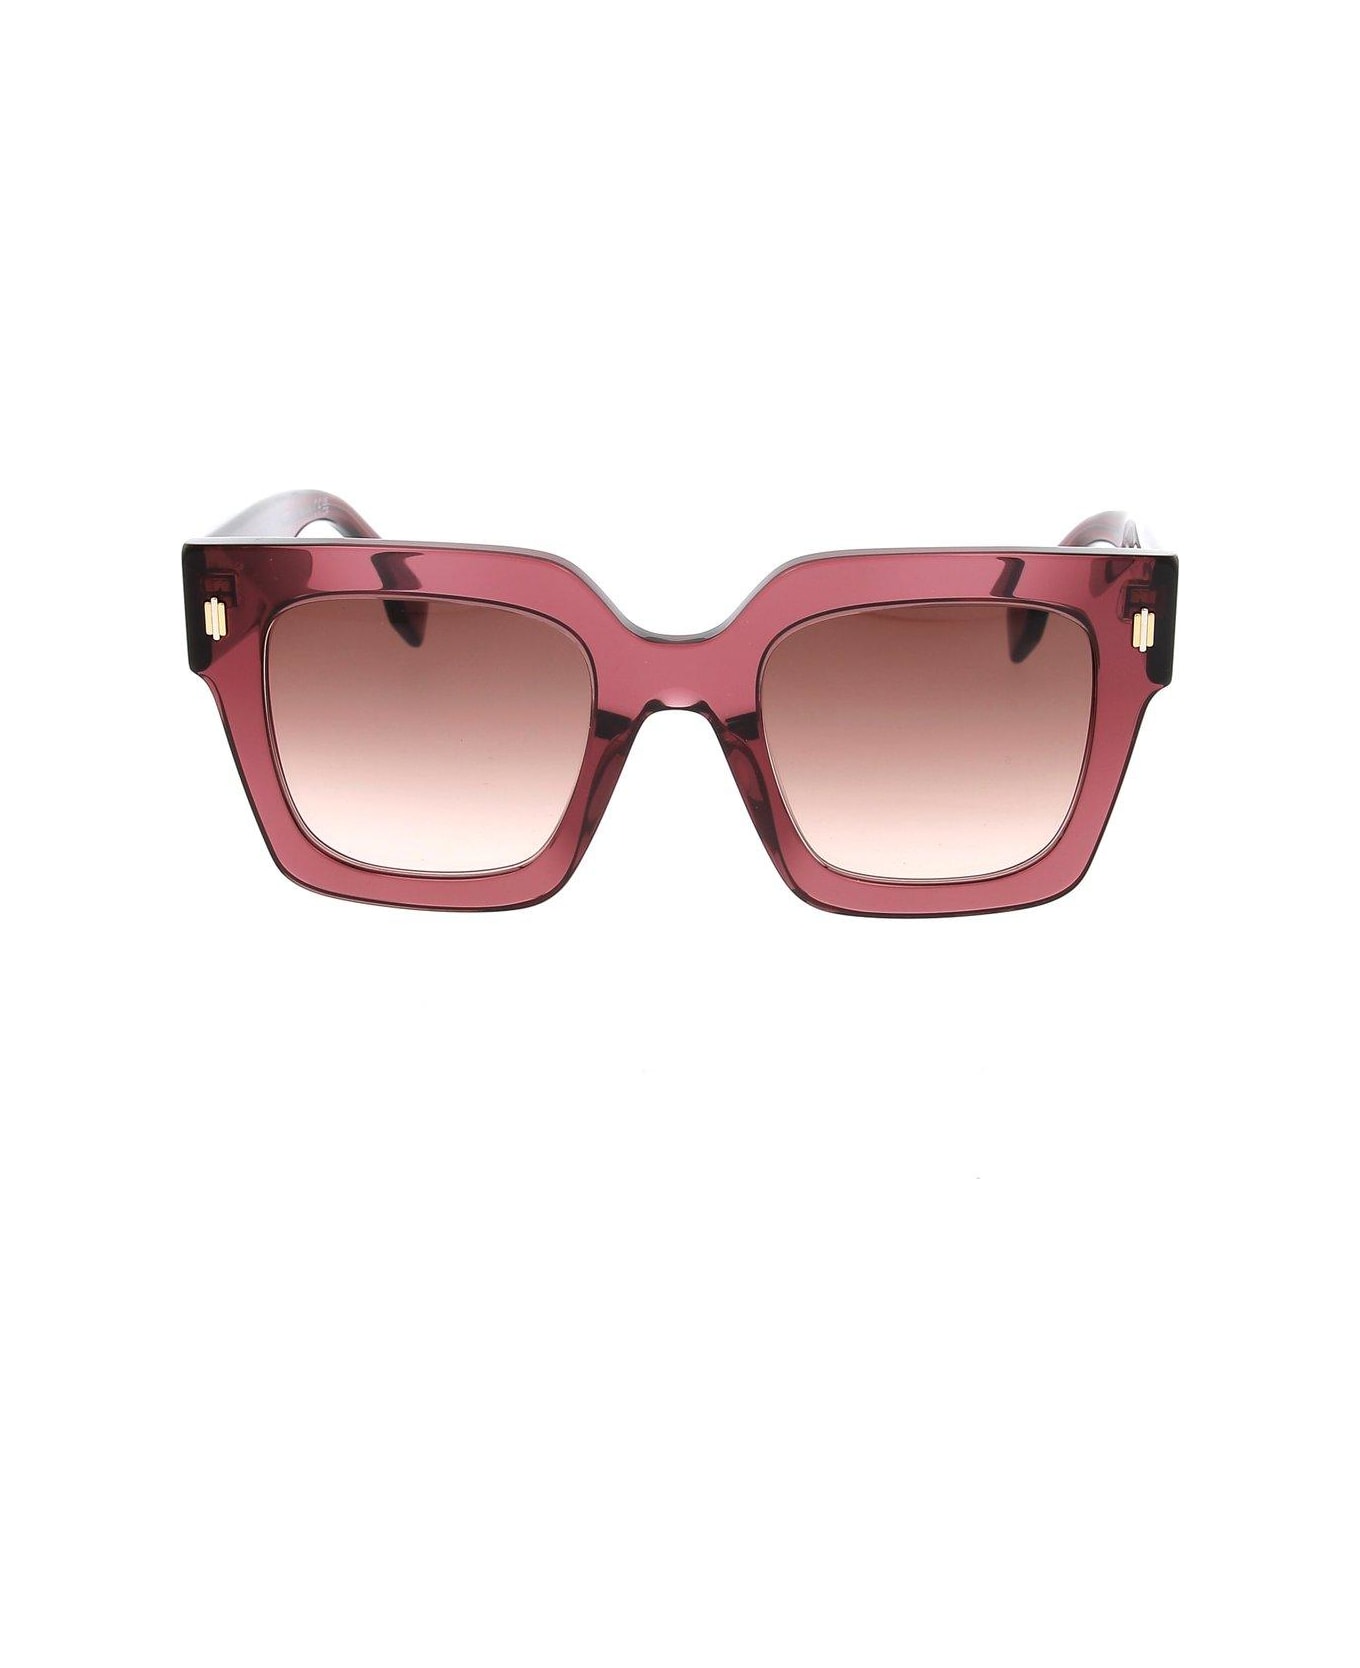 Fendi Eyewear Square Frame Sunglasses - 81f